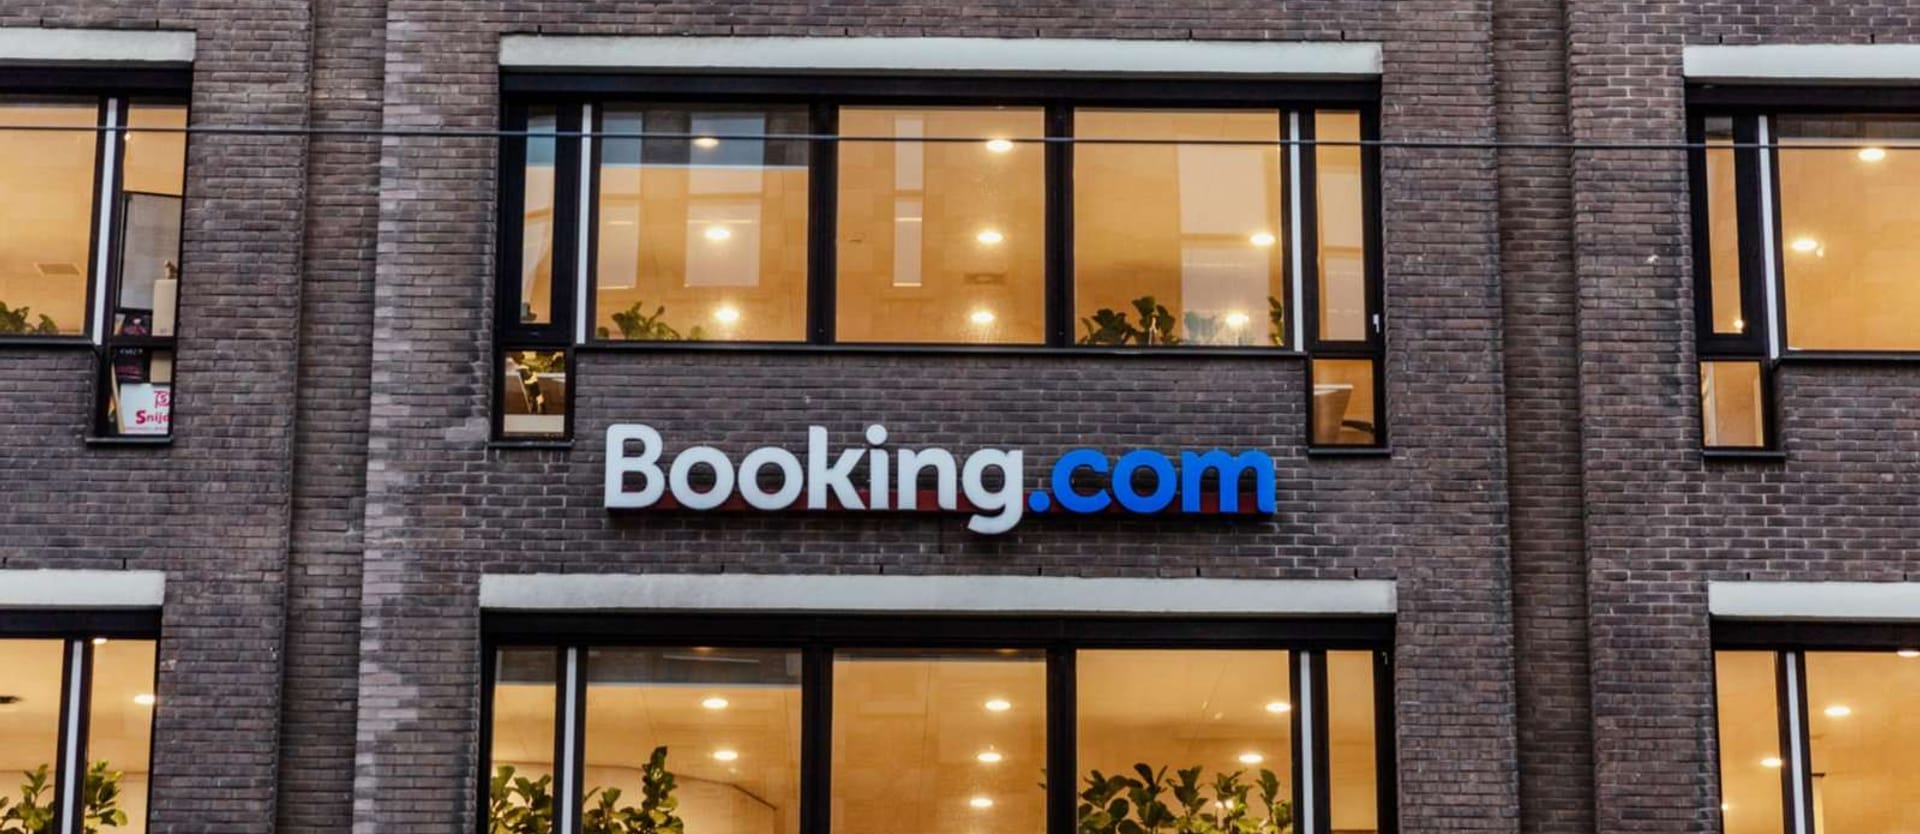 Booking.com Partnership and Affiliate Programs